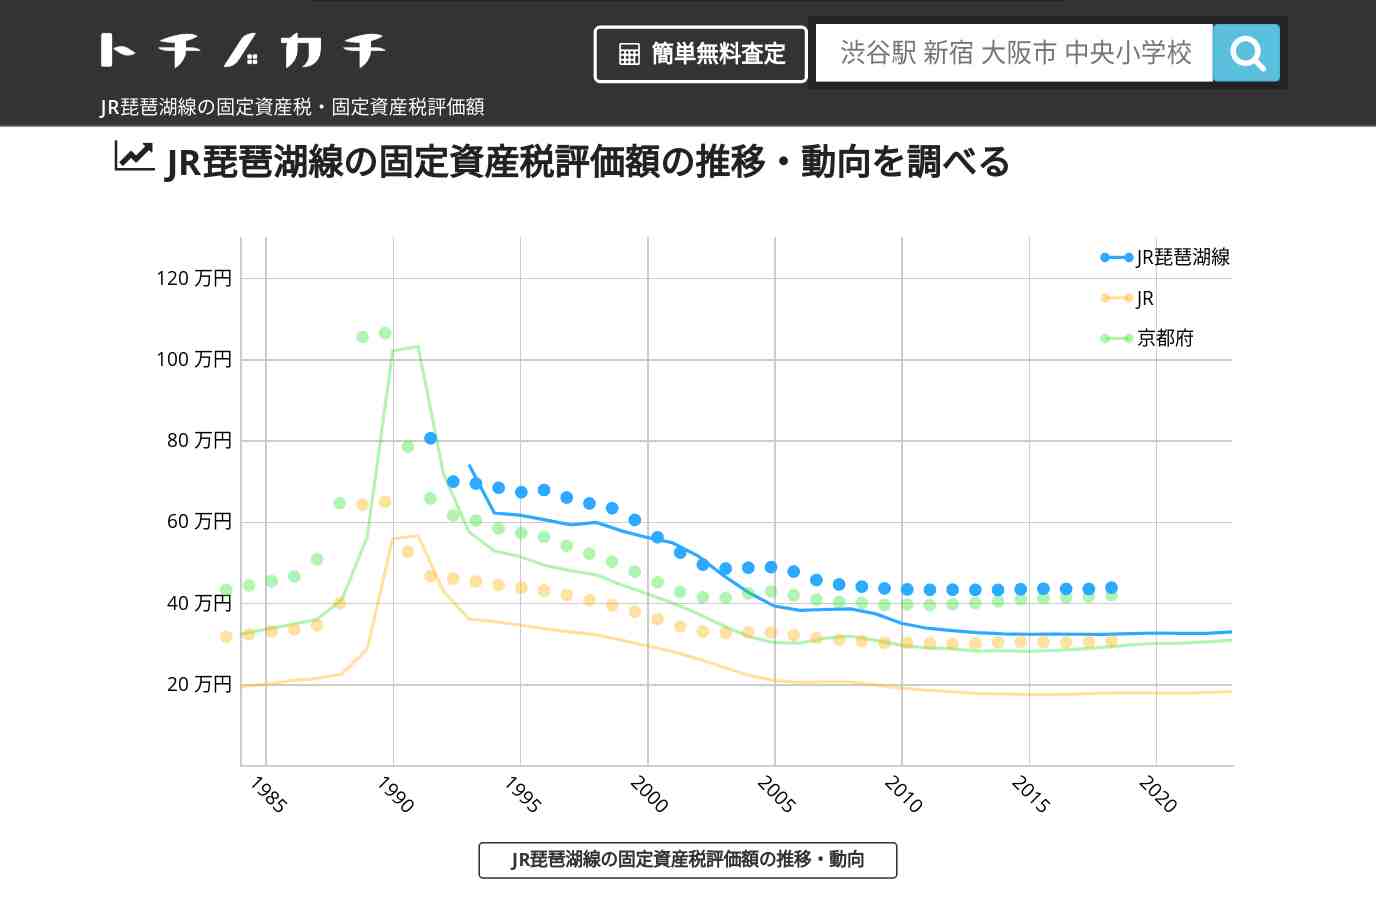 JR琵琶湖線(JR)の固定資産税・固定資産税評価額 | トチノカチ